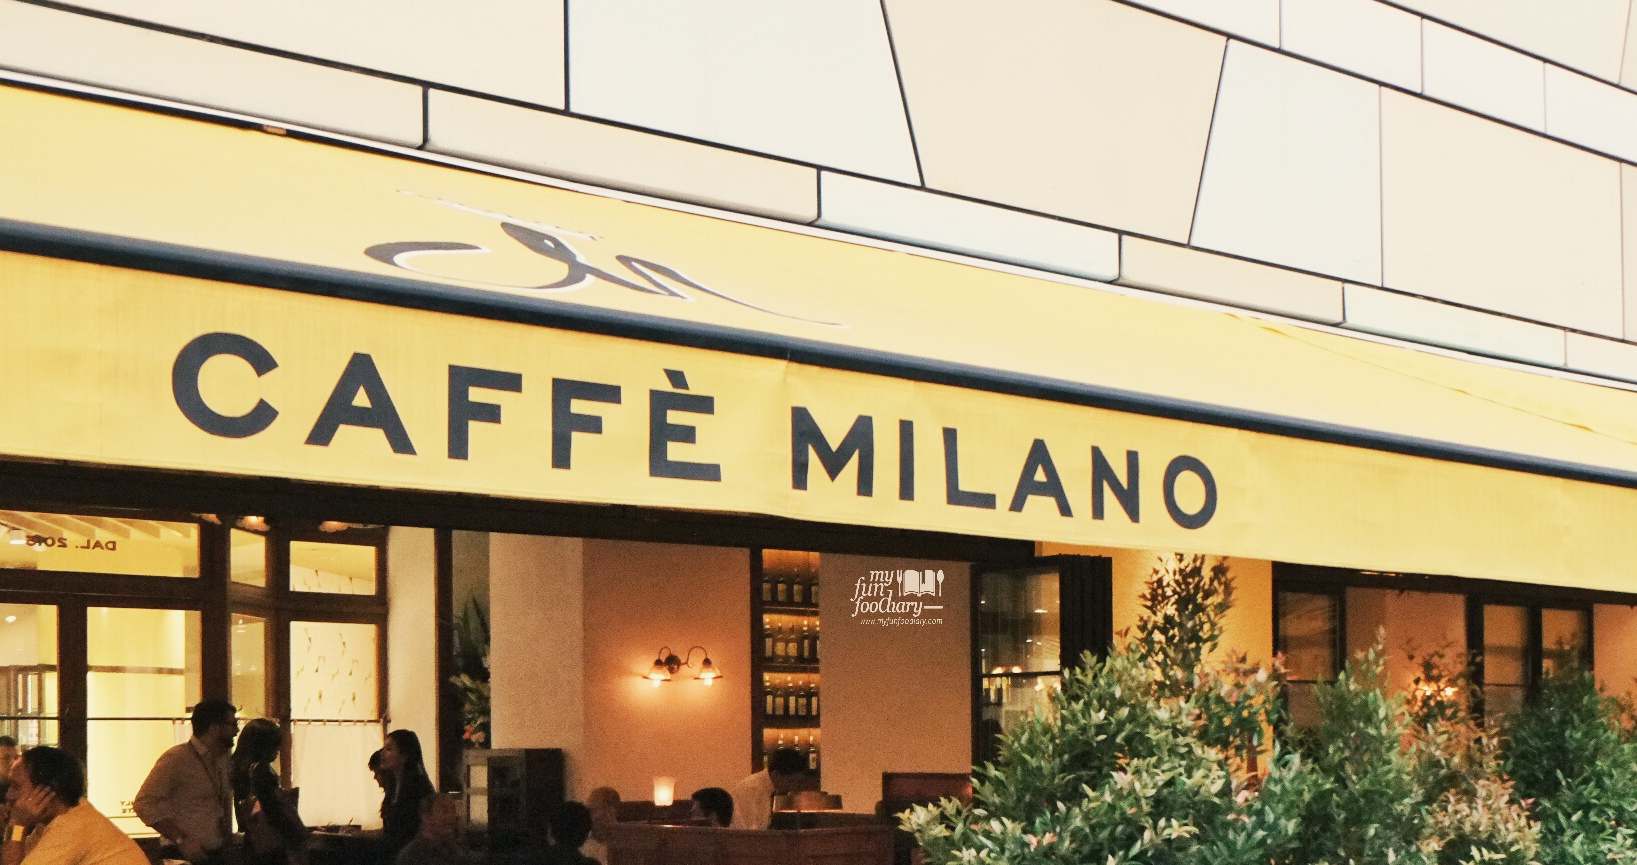 Signboard Caffe Milano by Myfunfoodiary